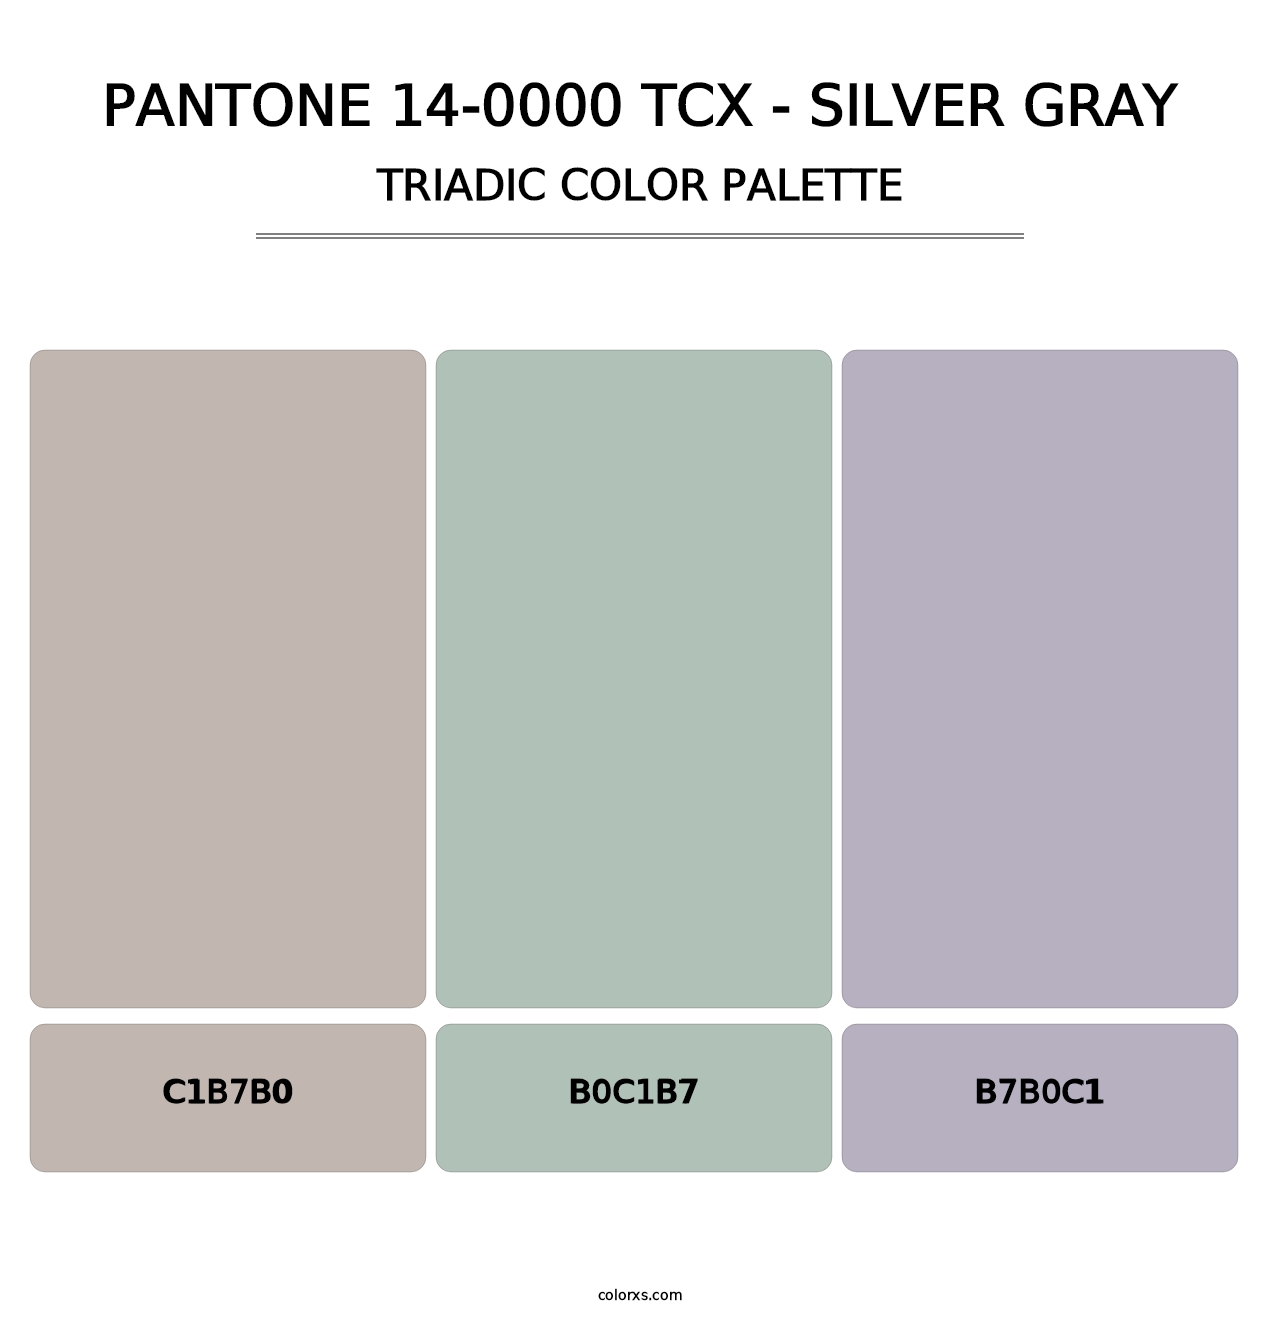 PANTONE 14-0000 TCX - Silver Gray - Triadic Color Palette